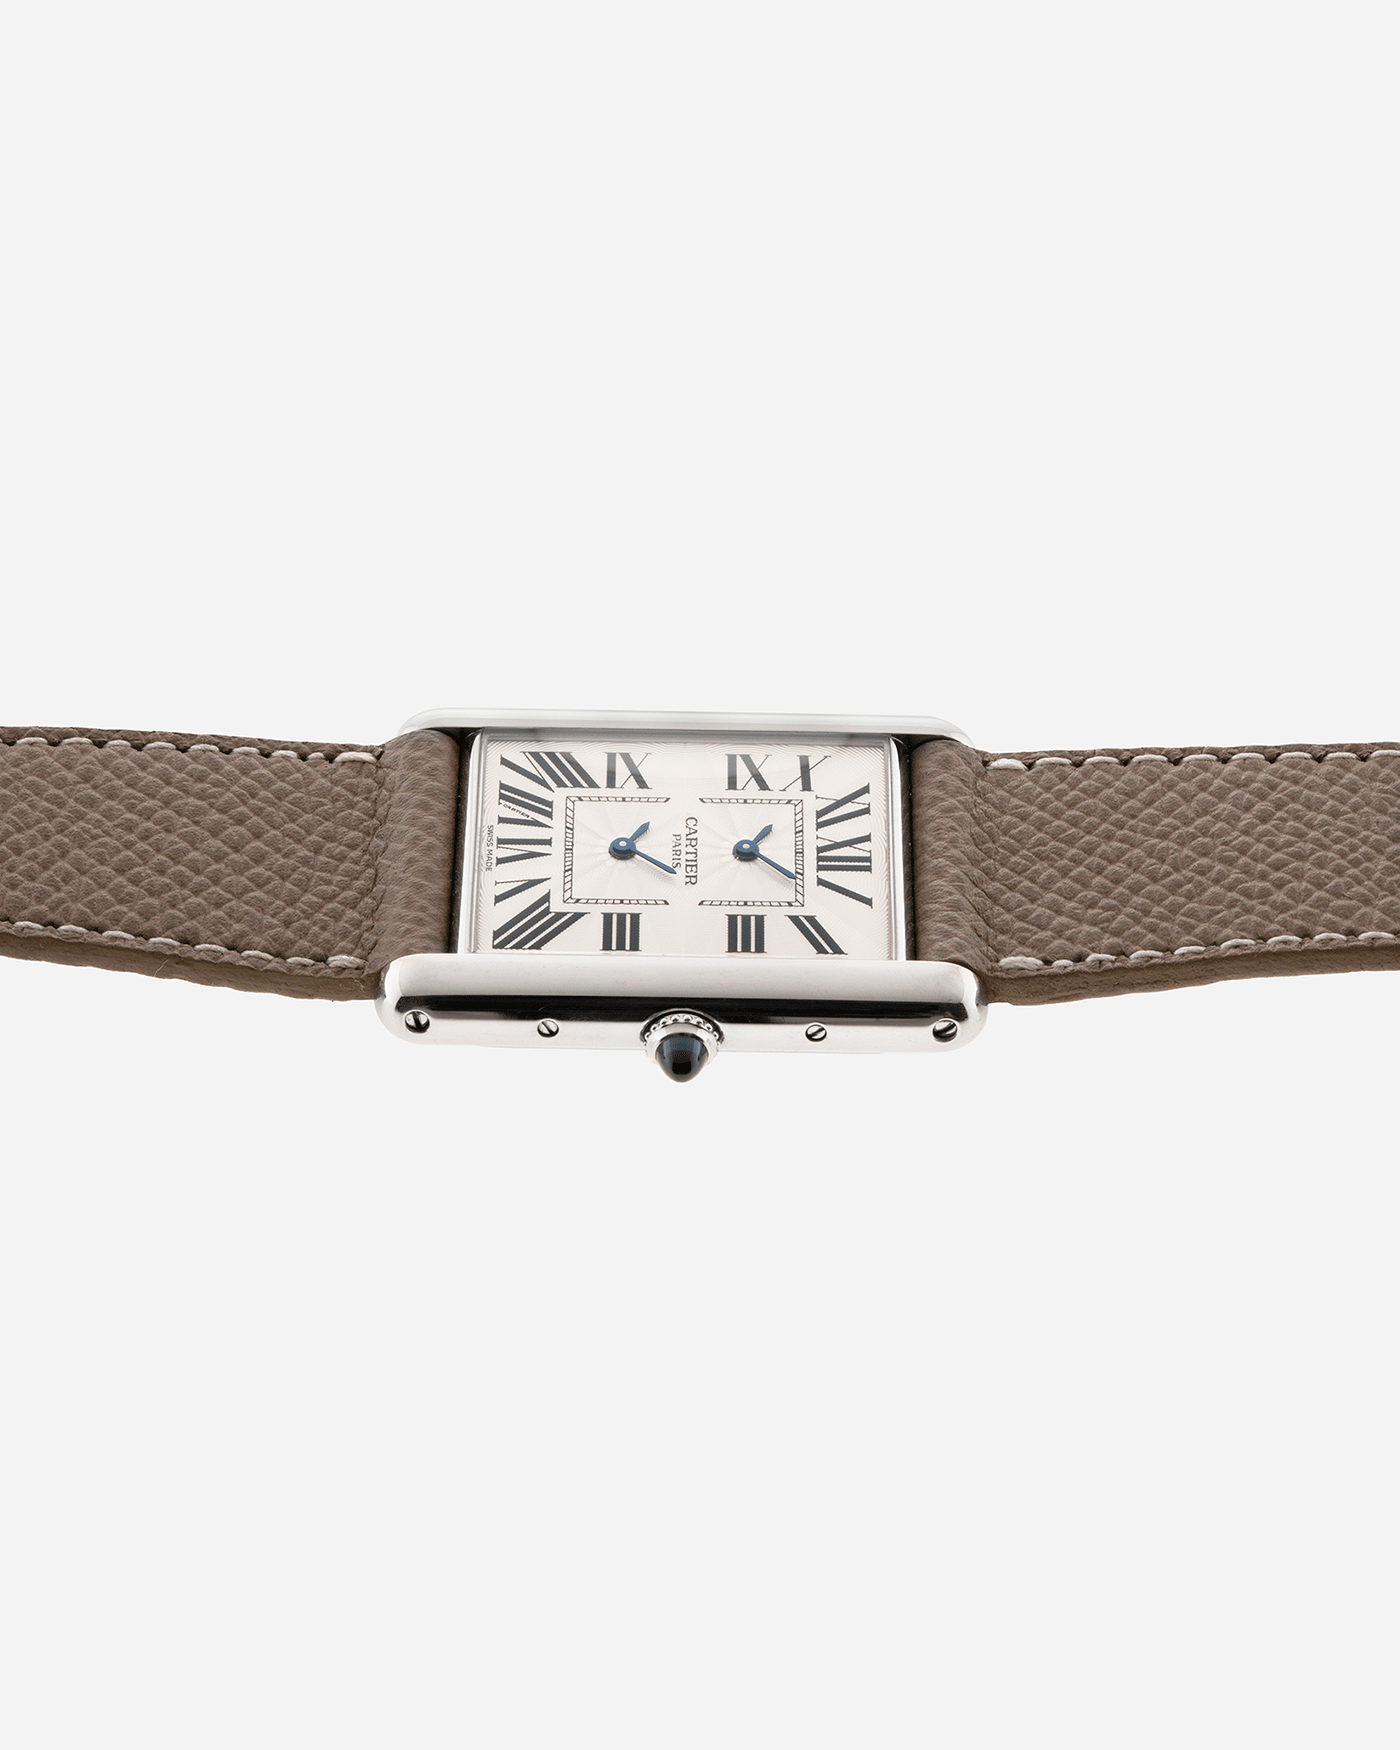 Cartier Tank CPCP Dual Time 2917 Collection Prive Cartier Paris Watch | S.Song Vintage Timepieces 